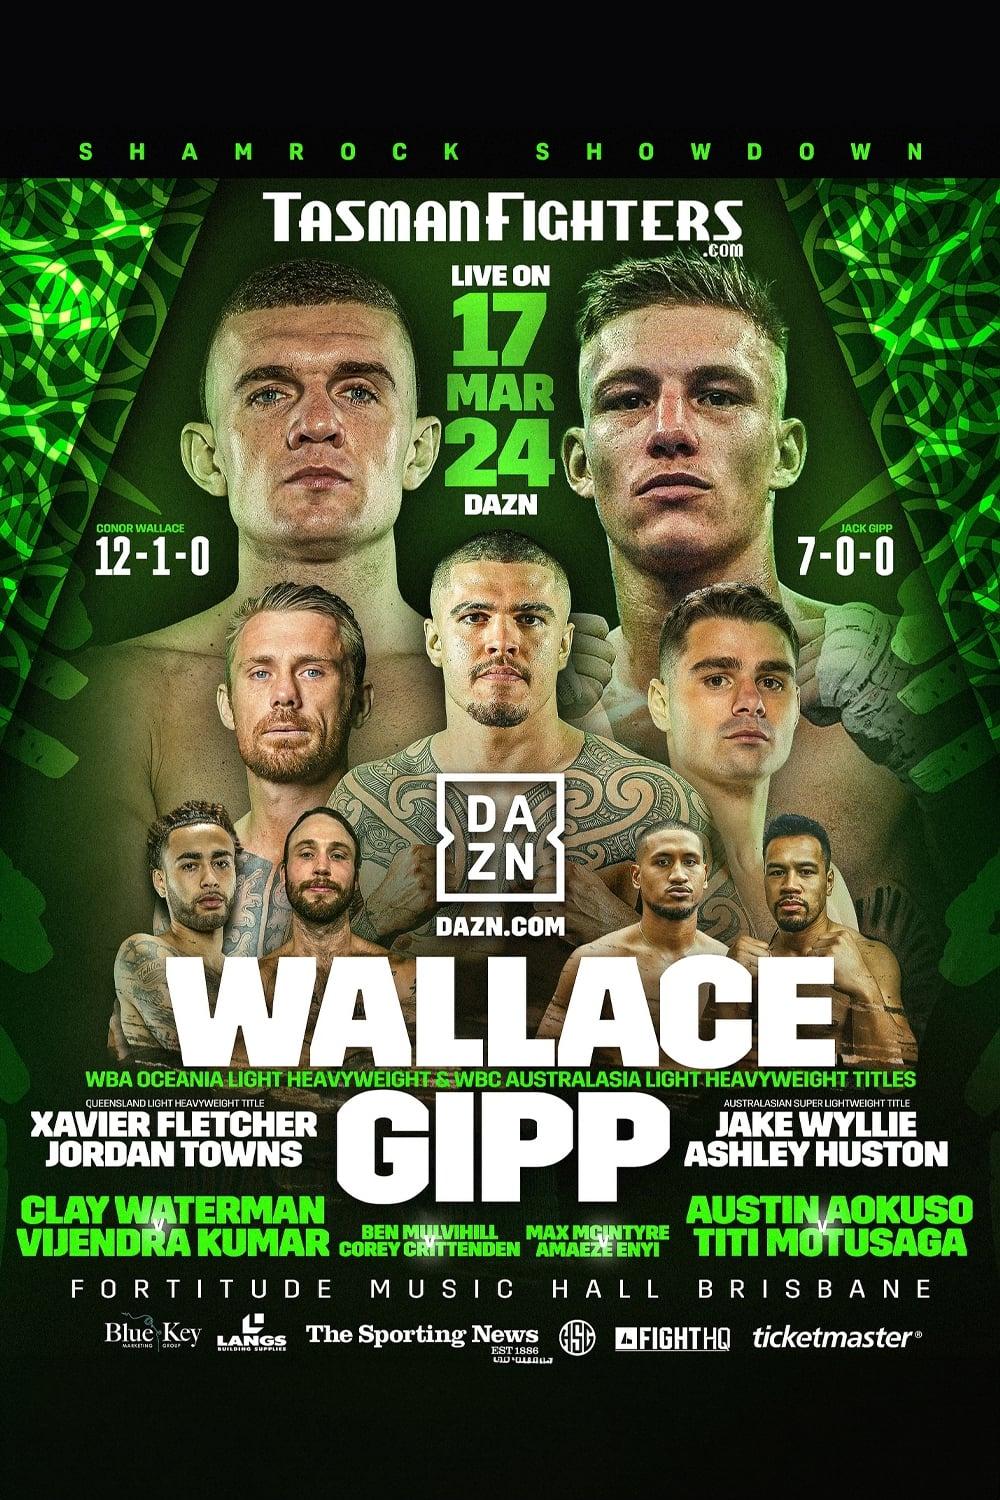 Conor Wallace vs. Jack Gipp poster